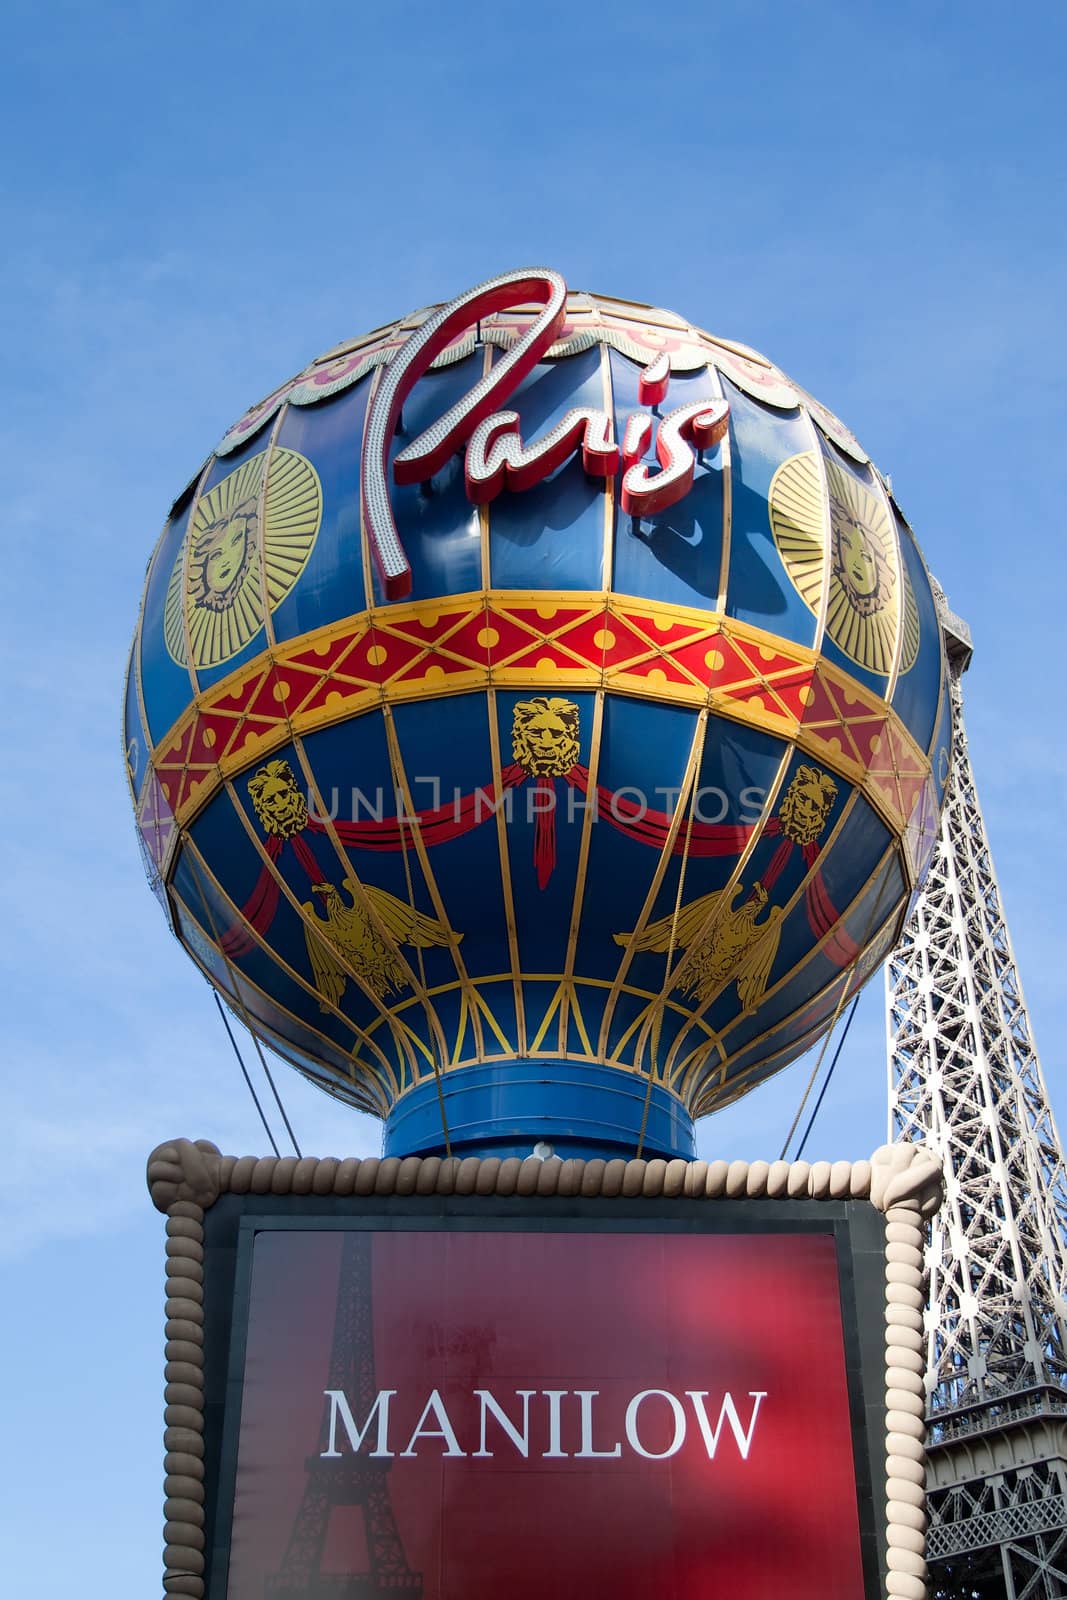 December 30th, 2009 - Las Vegas, Nevada, USA - The Paris Hotel and Casino sign on Las Vegas Boulevard featuring Barry Manilow